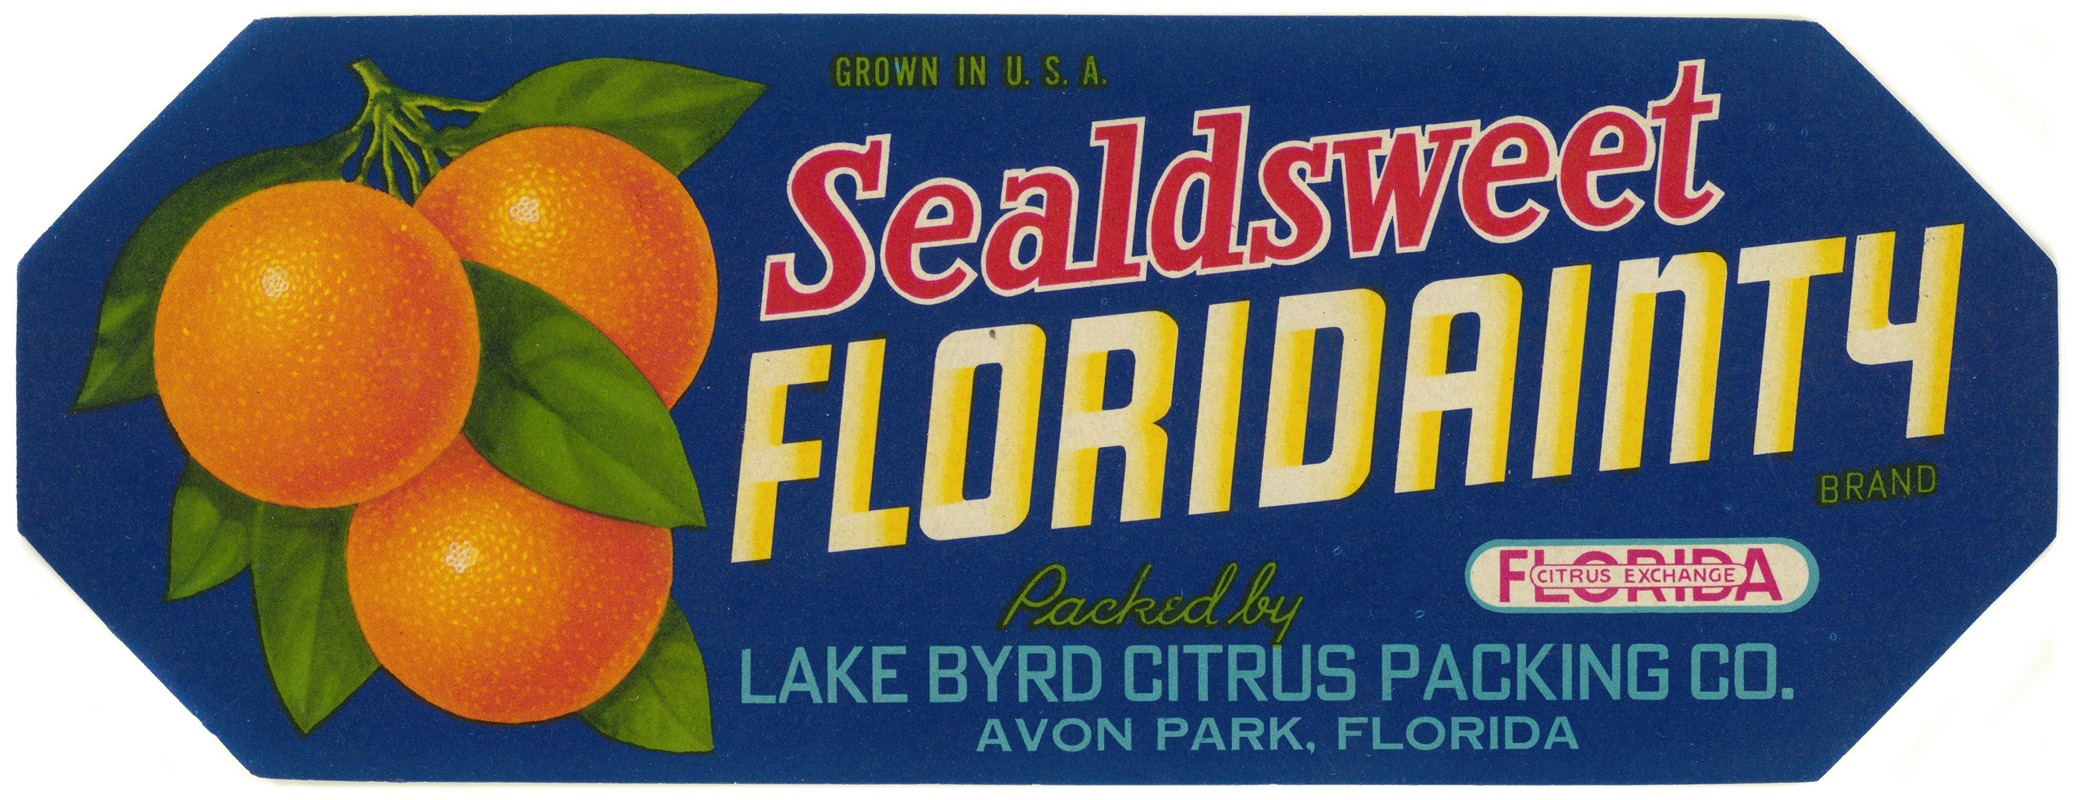 Anonymous - Floridainty Brand Citrus Label